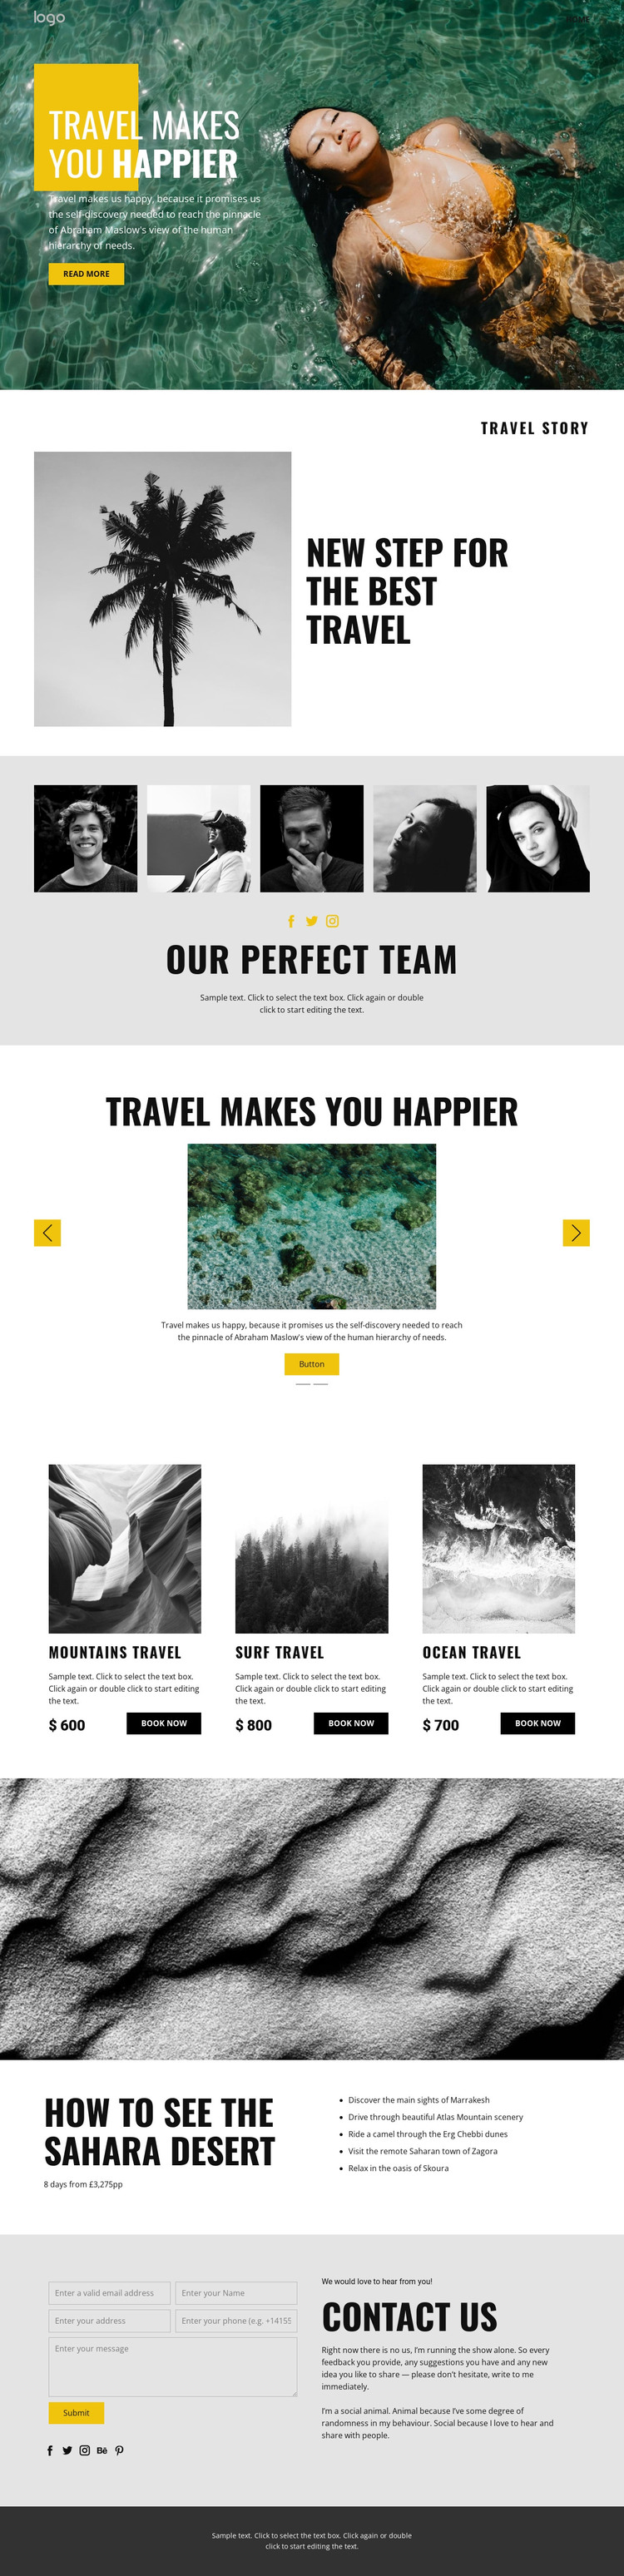 Happy people deserve travel Web Design